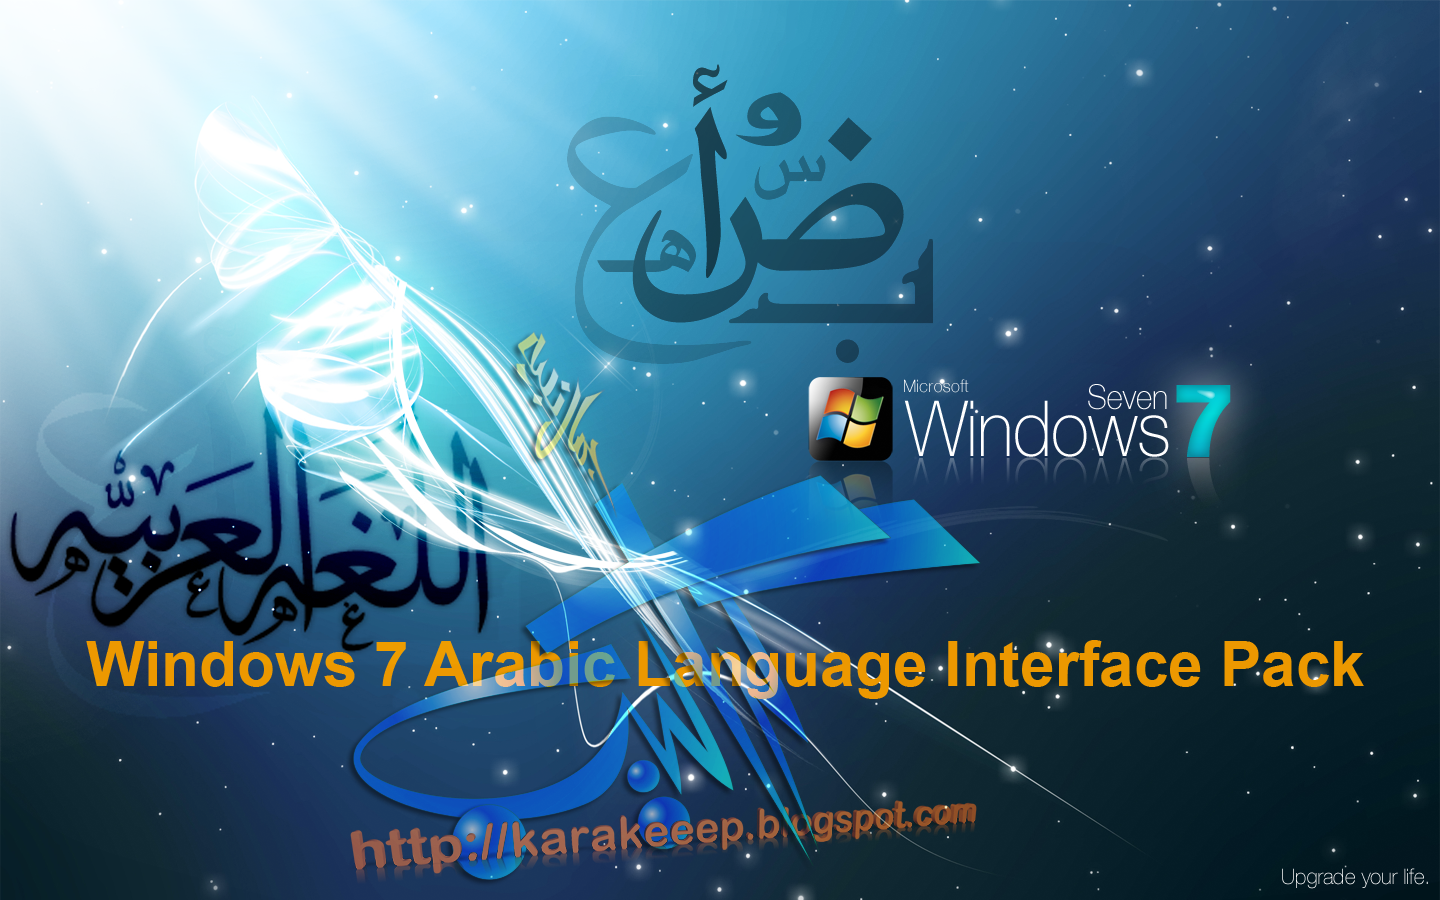 Windows 7 Arabic Language Interface Pack